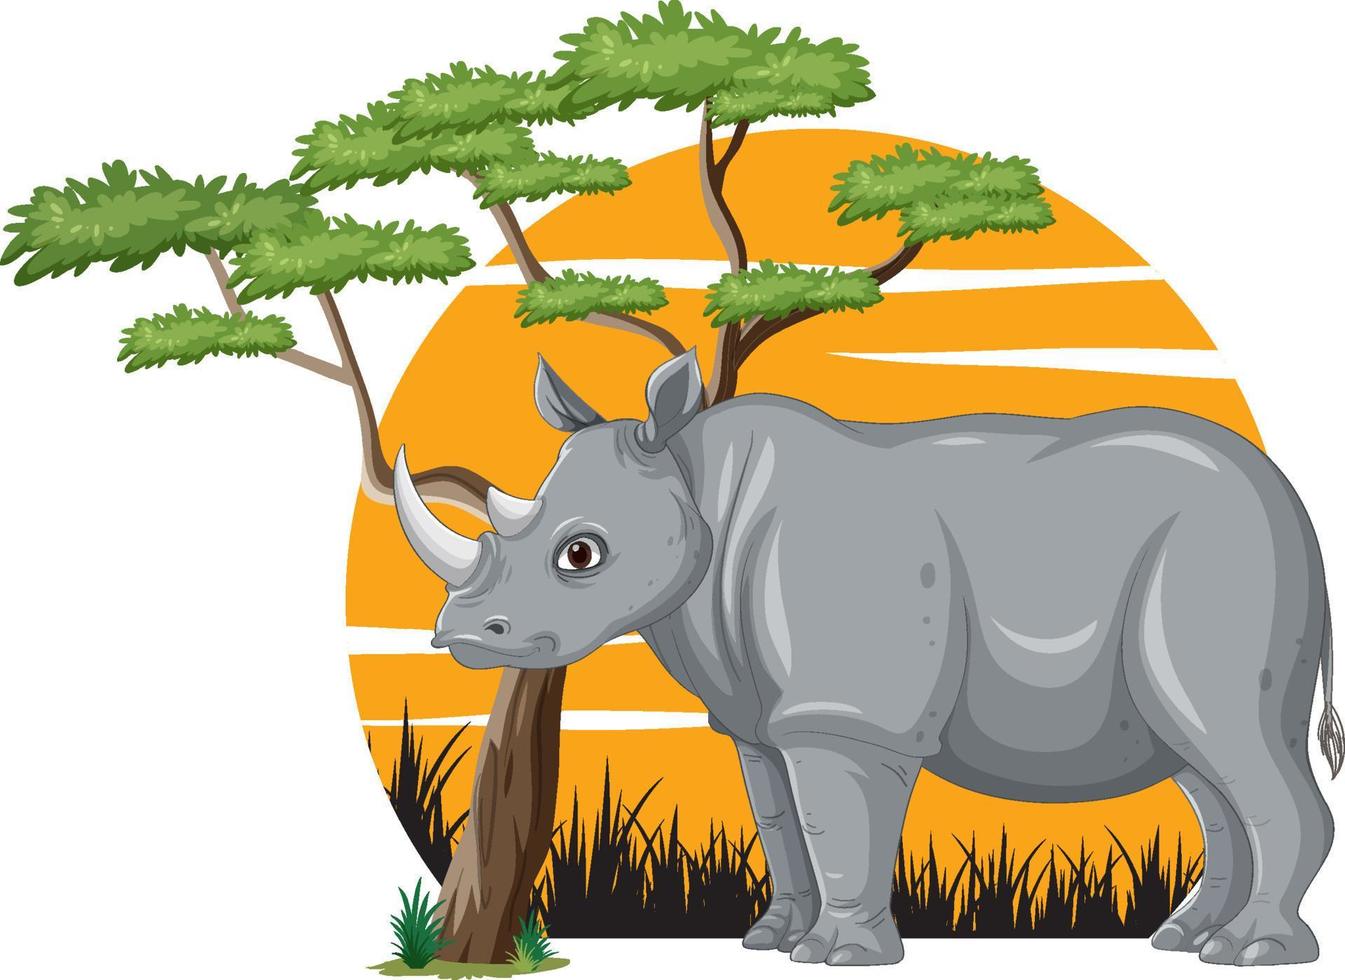 Rhinosaurus with tree in cartoon style vector